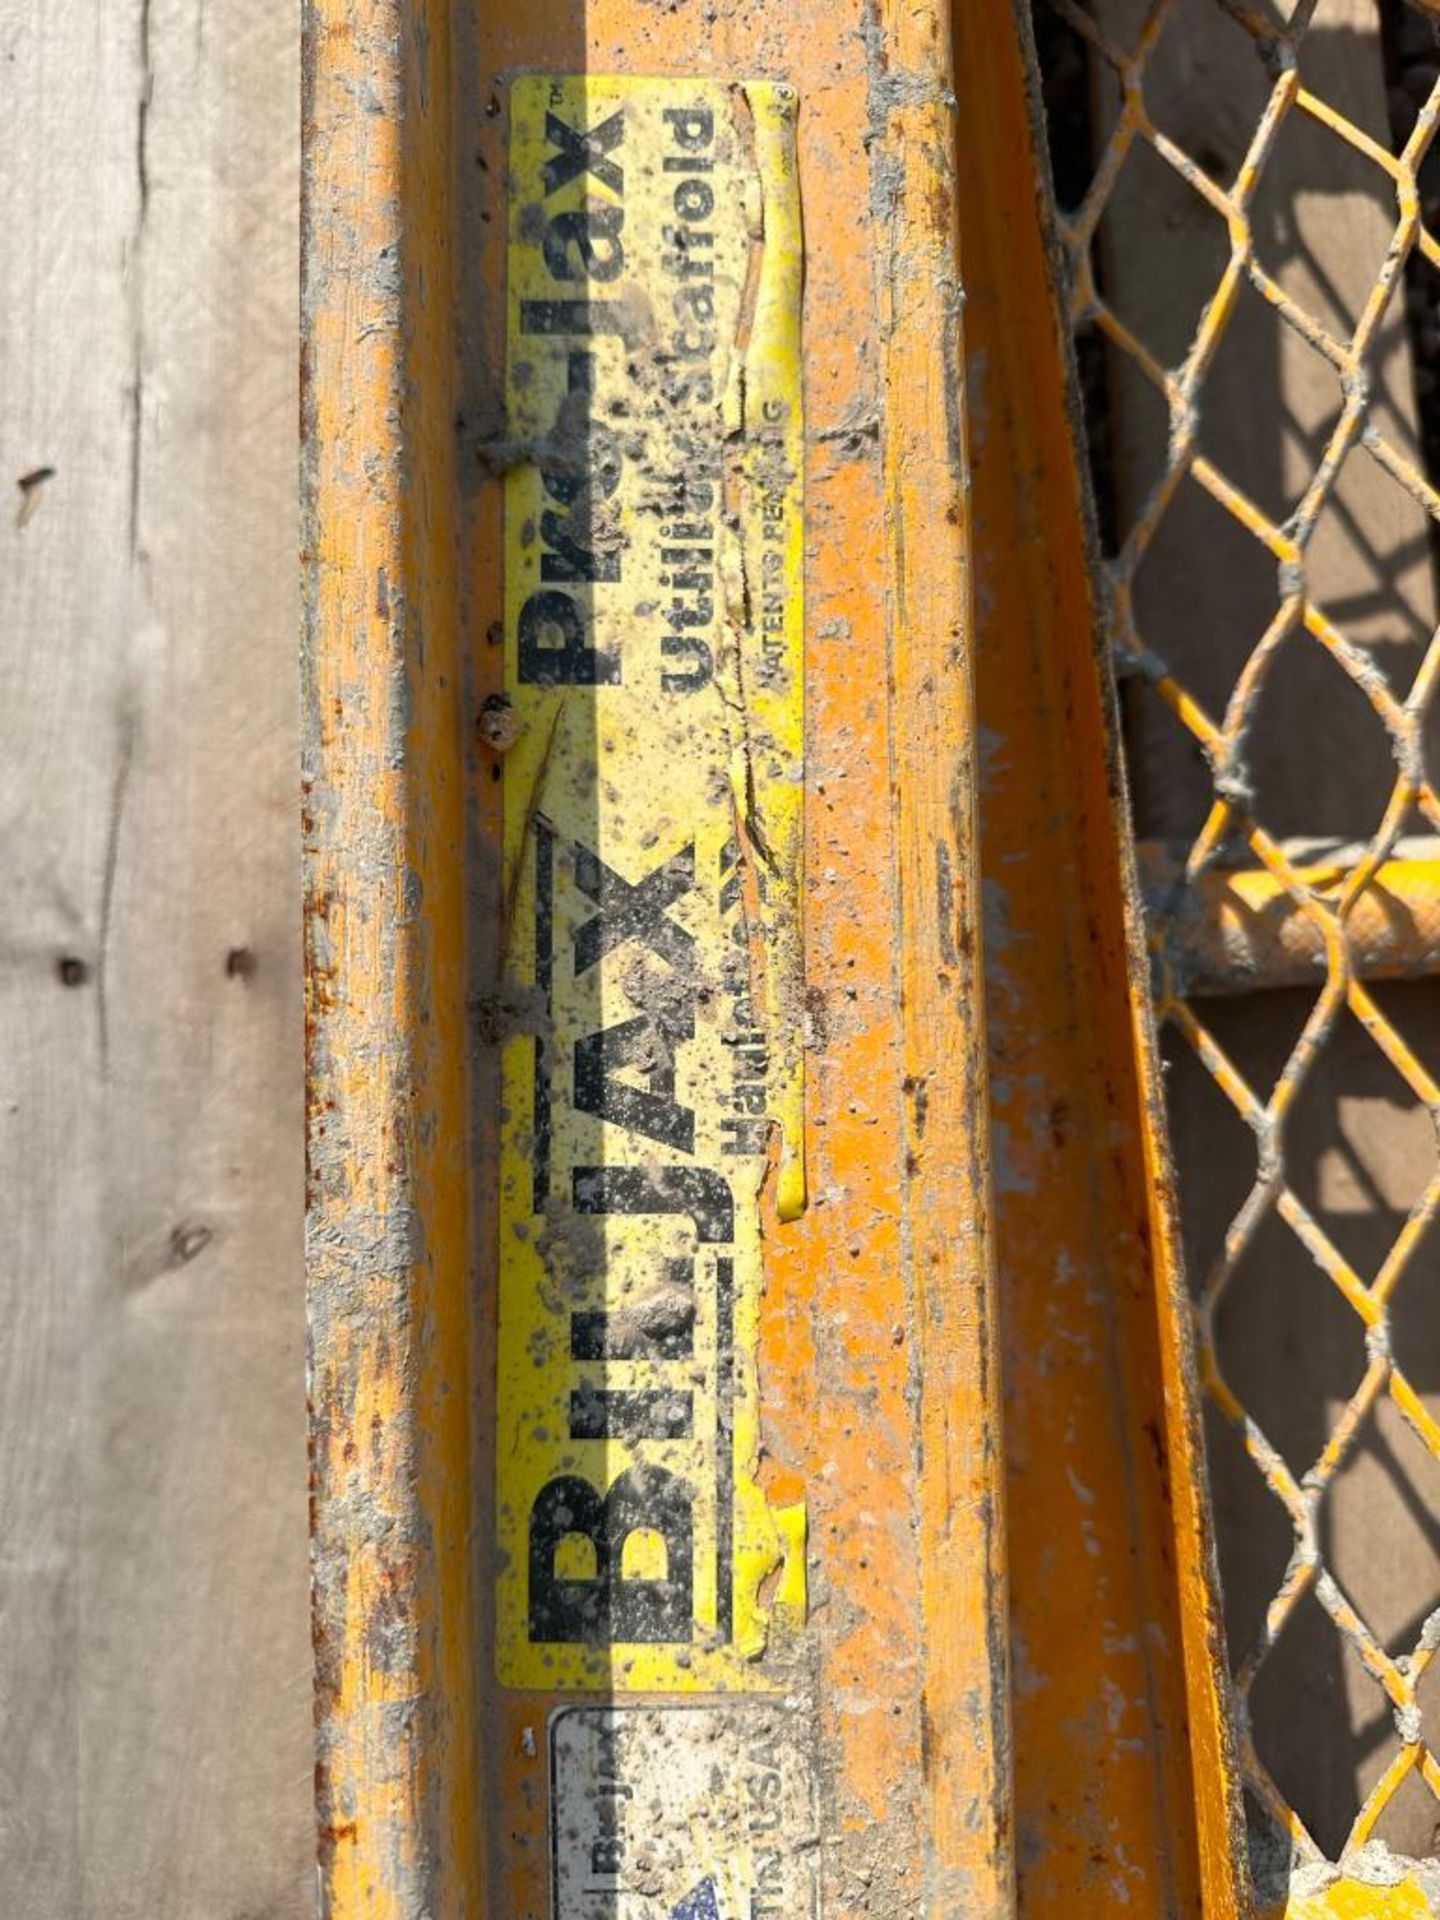 Bil-Jax 6' steel rolling scaffolding, located in Mt. Pleasant, IA. - Image 4 of 4